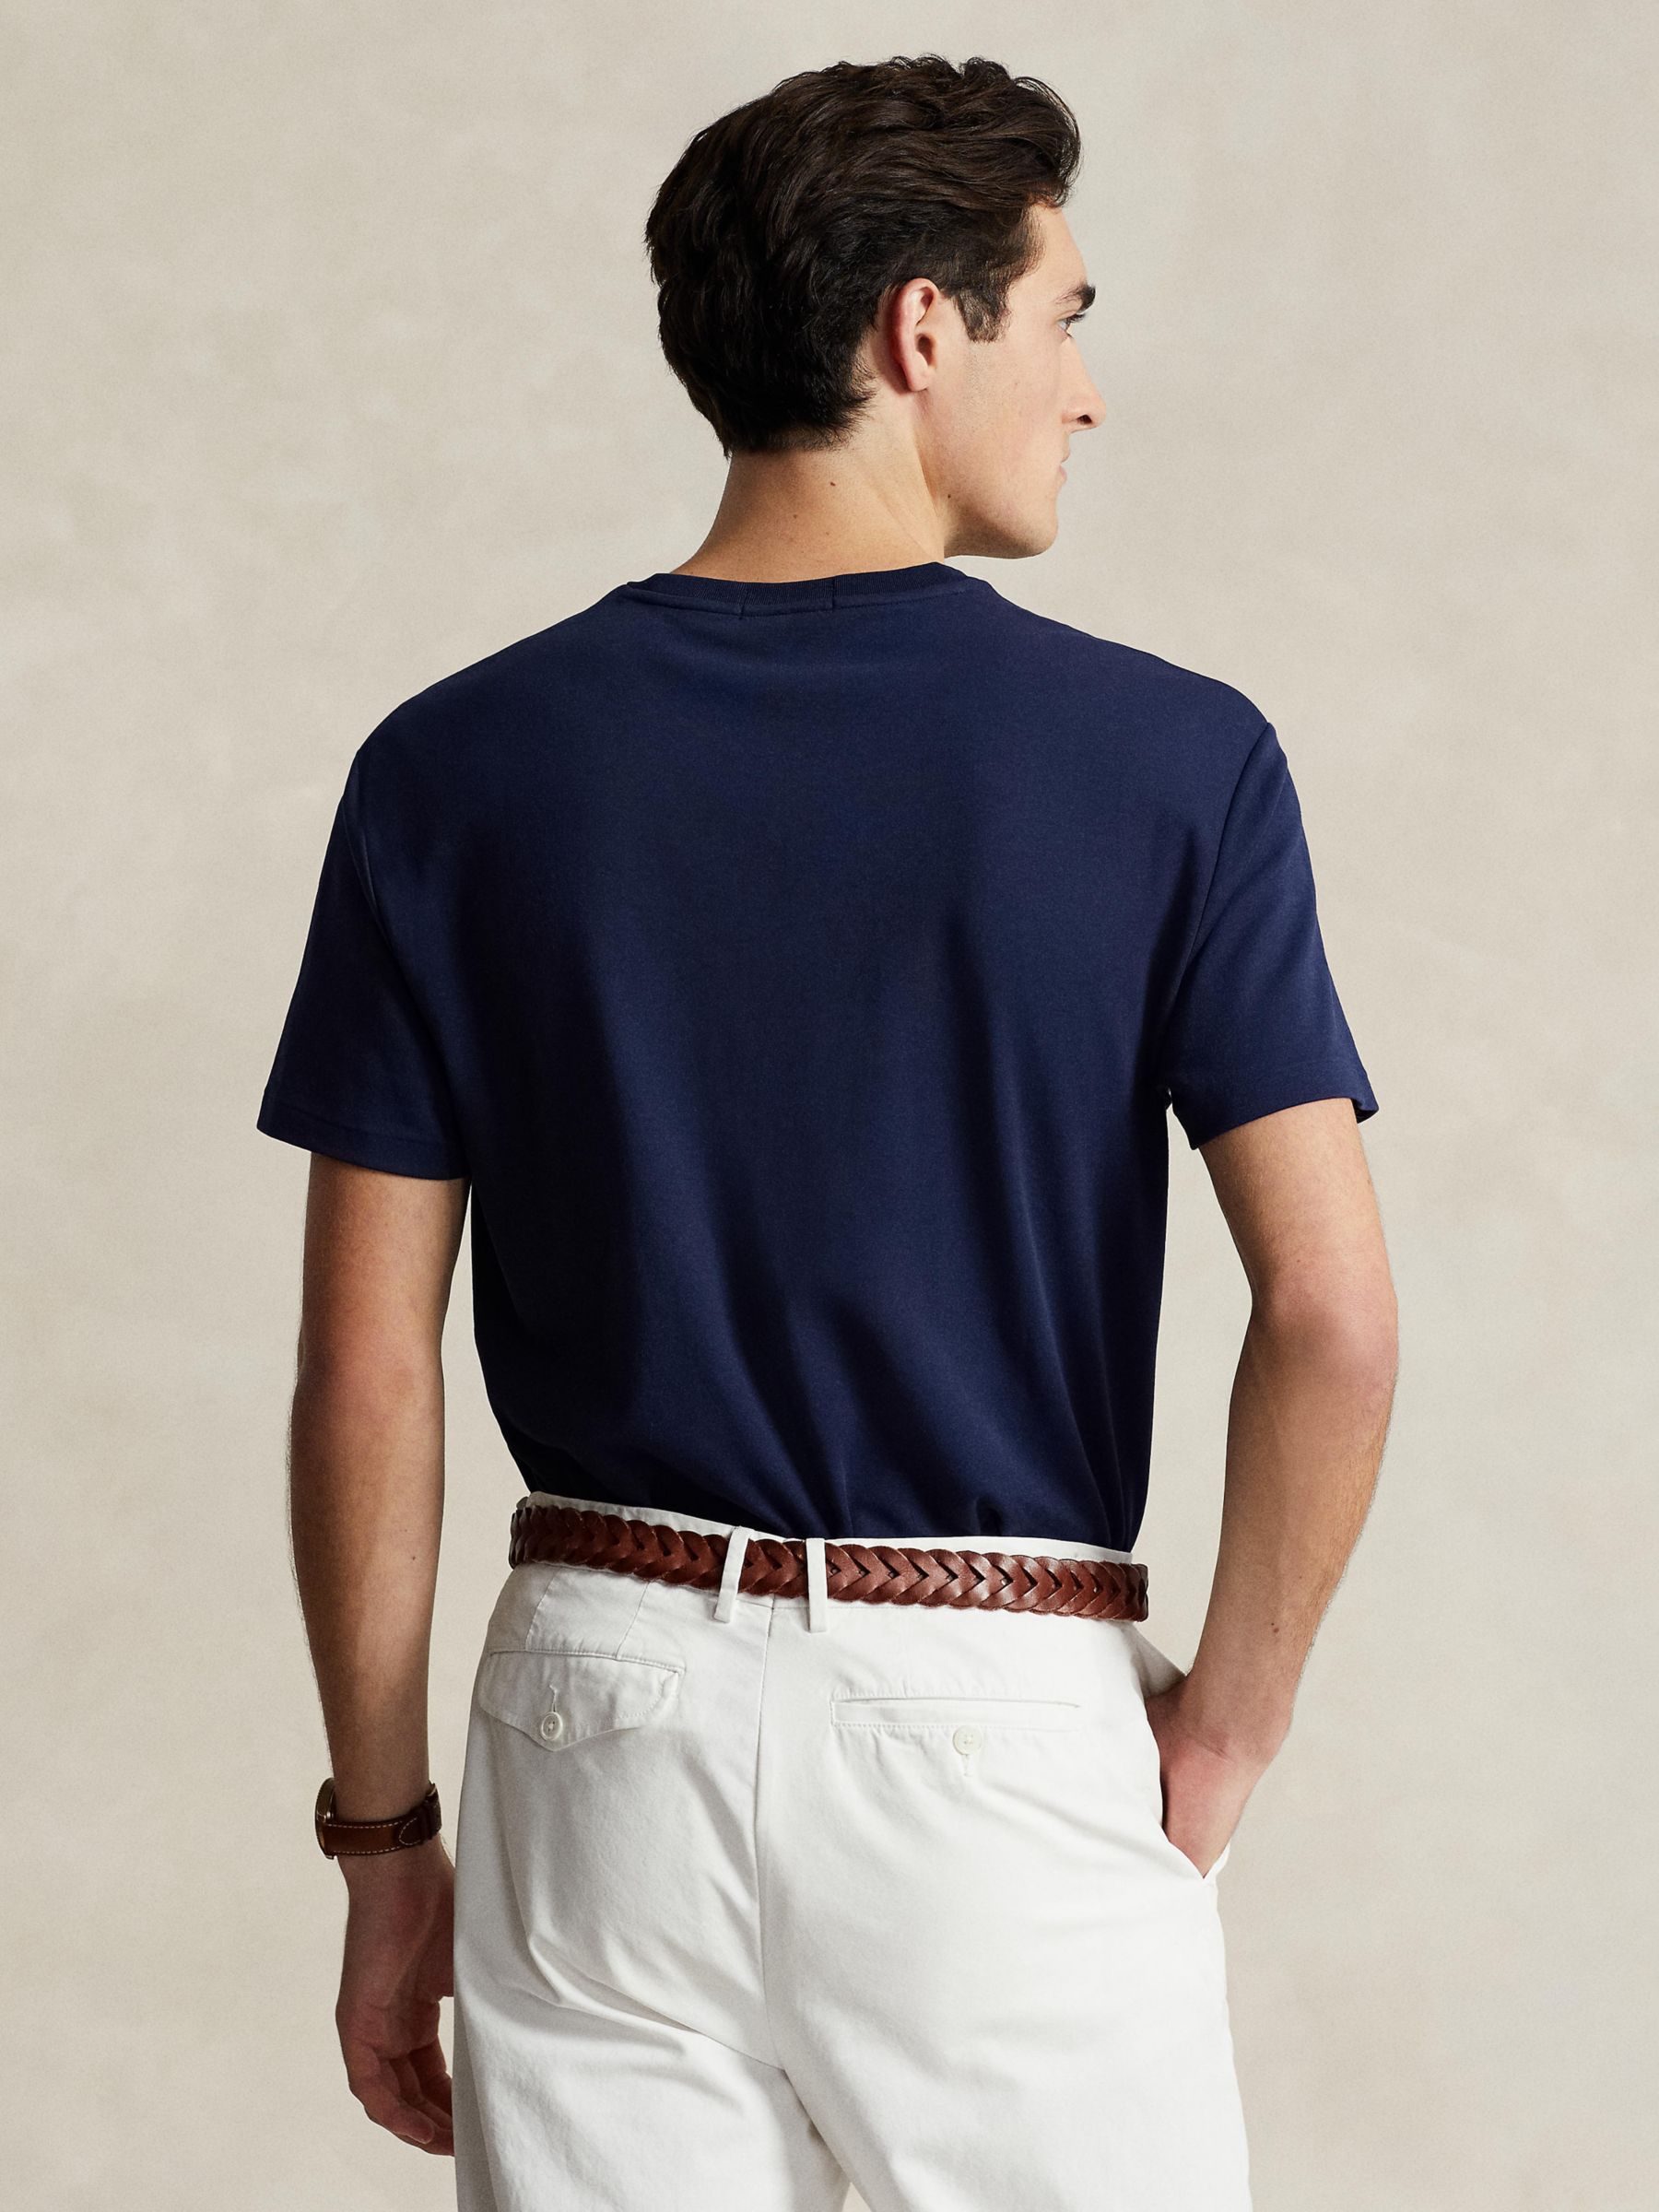 Polo Ralph Lauren Pima Cotton Custom Fit Crew Neck T-Shirt, Navy, S